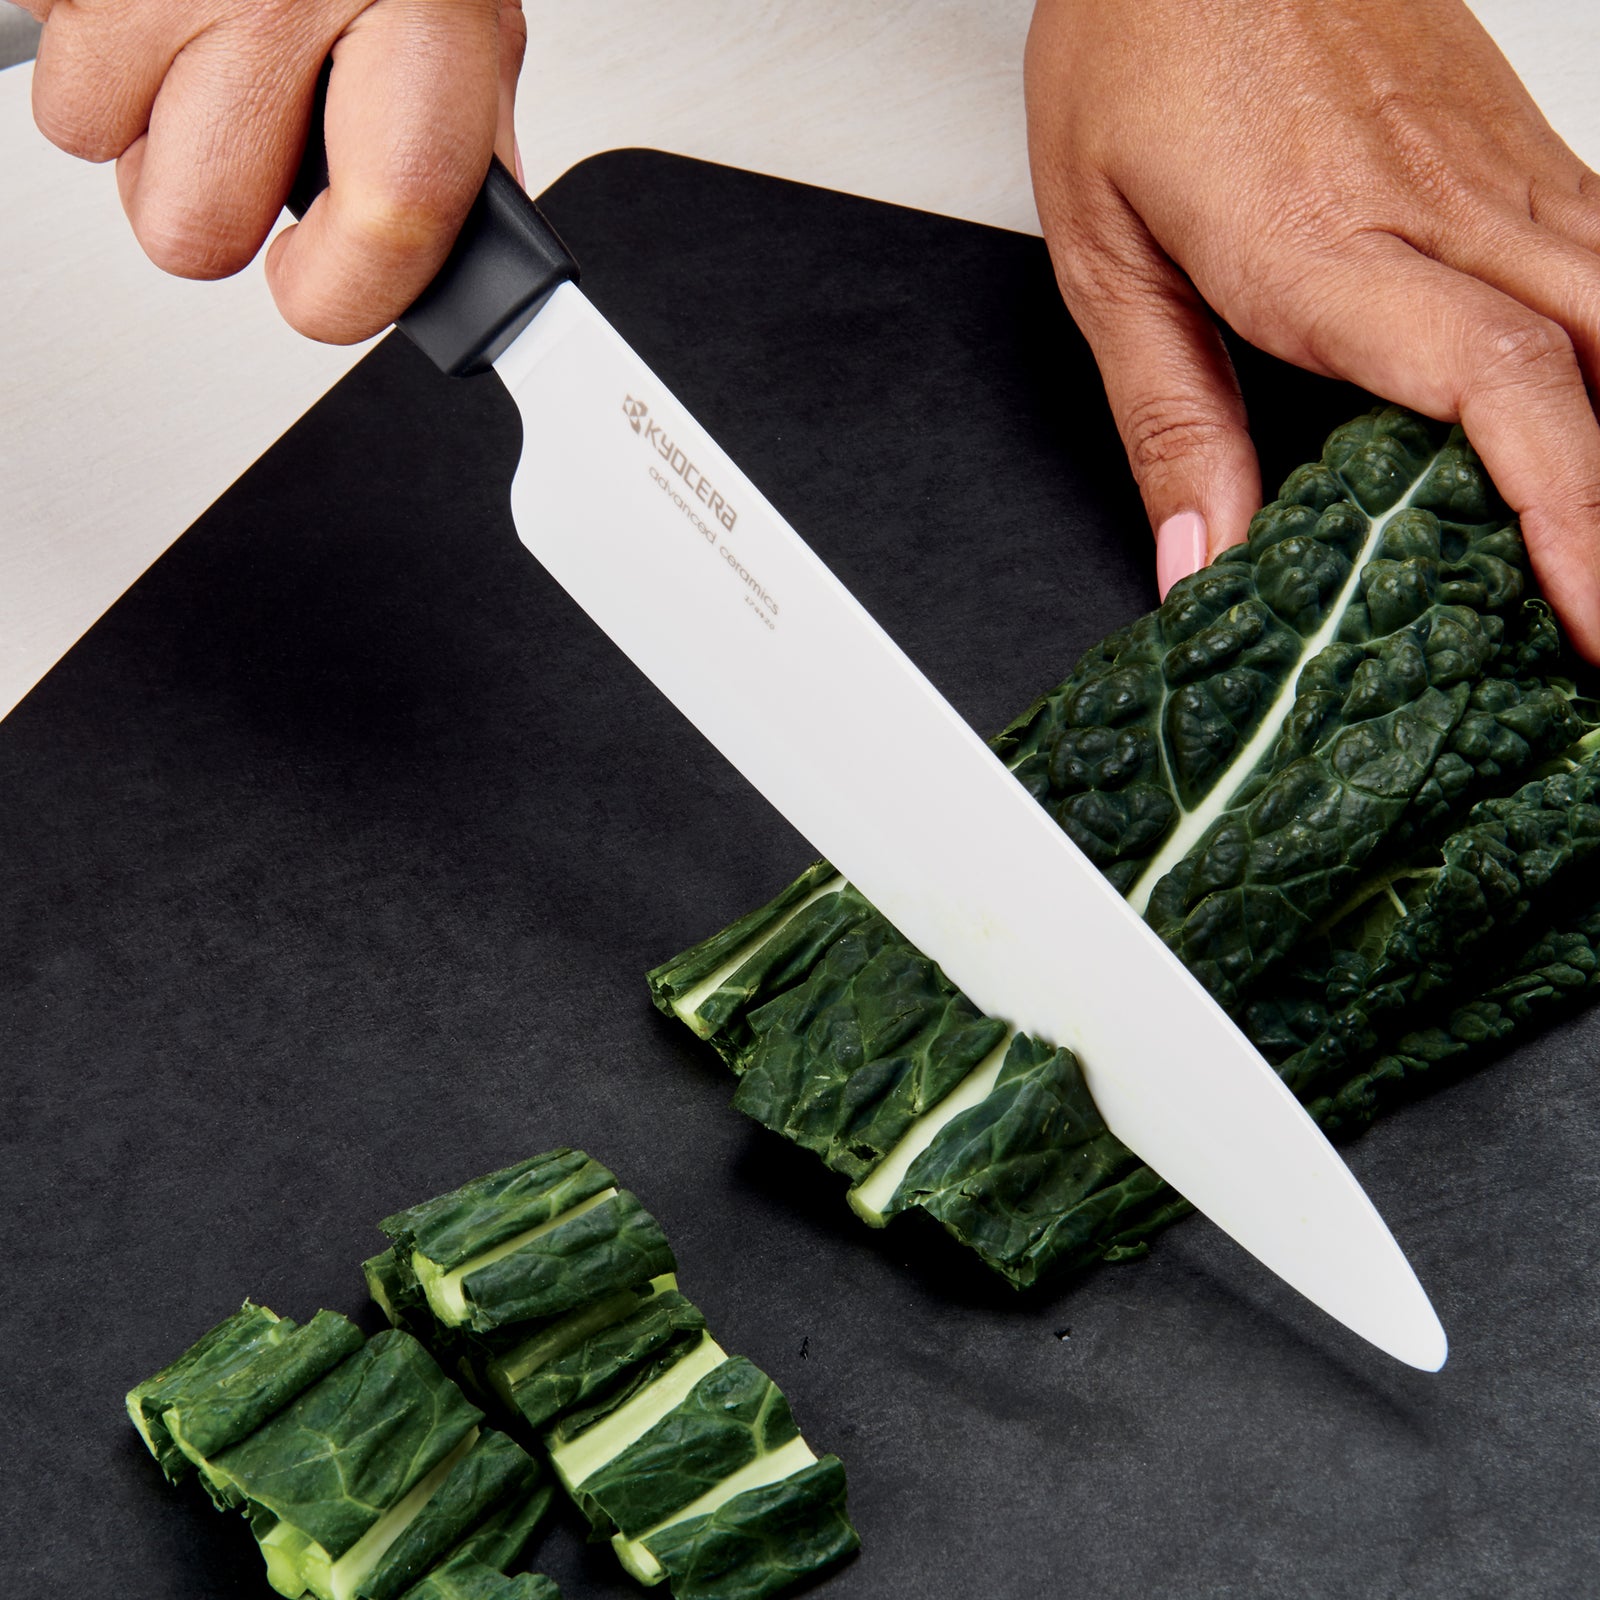 https://cdn.shopify.com/s/files/1/0989/9404/products/0000974_innovation-soft-grip-7-ceramic-chefs-knife-white-z206-blade_1600x.jpg?v=1592954379